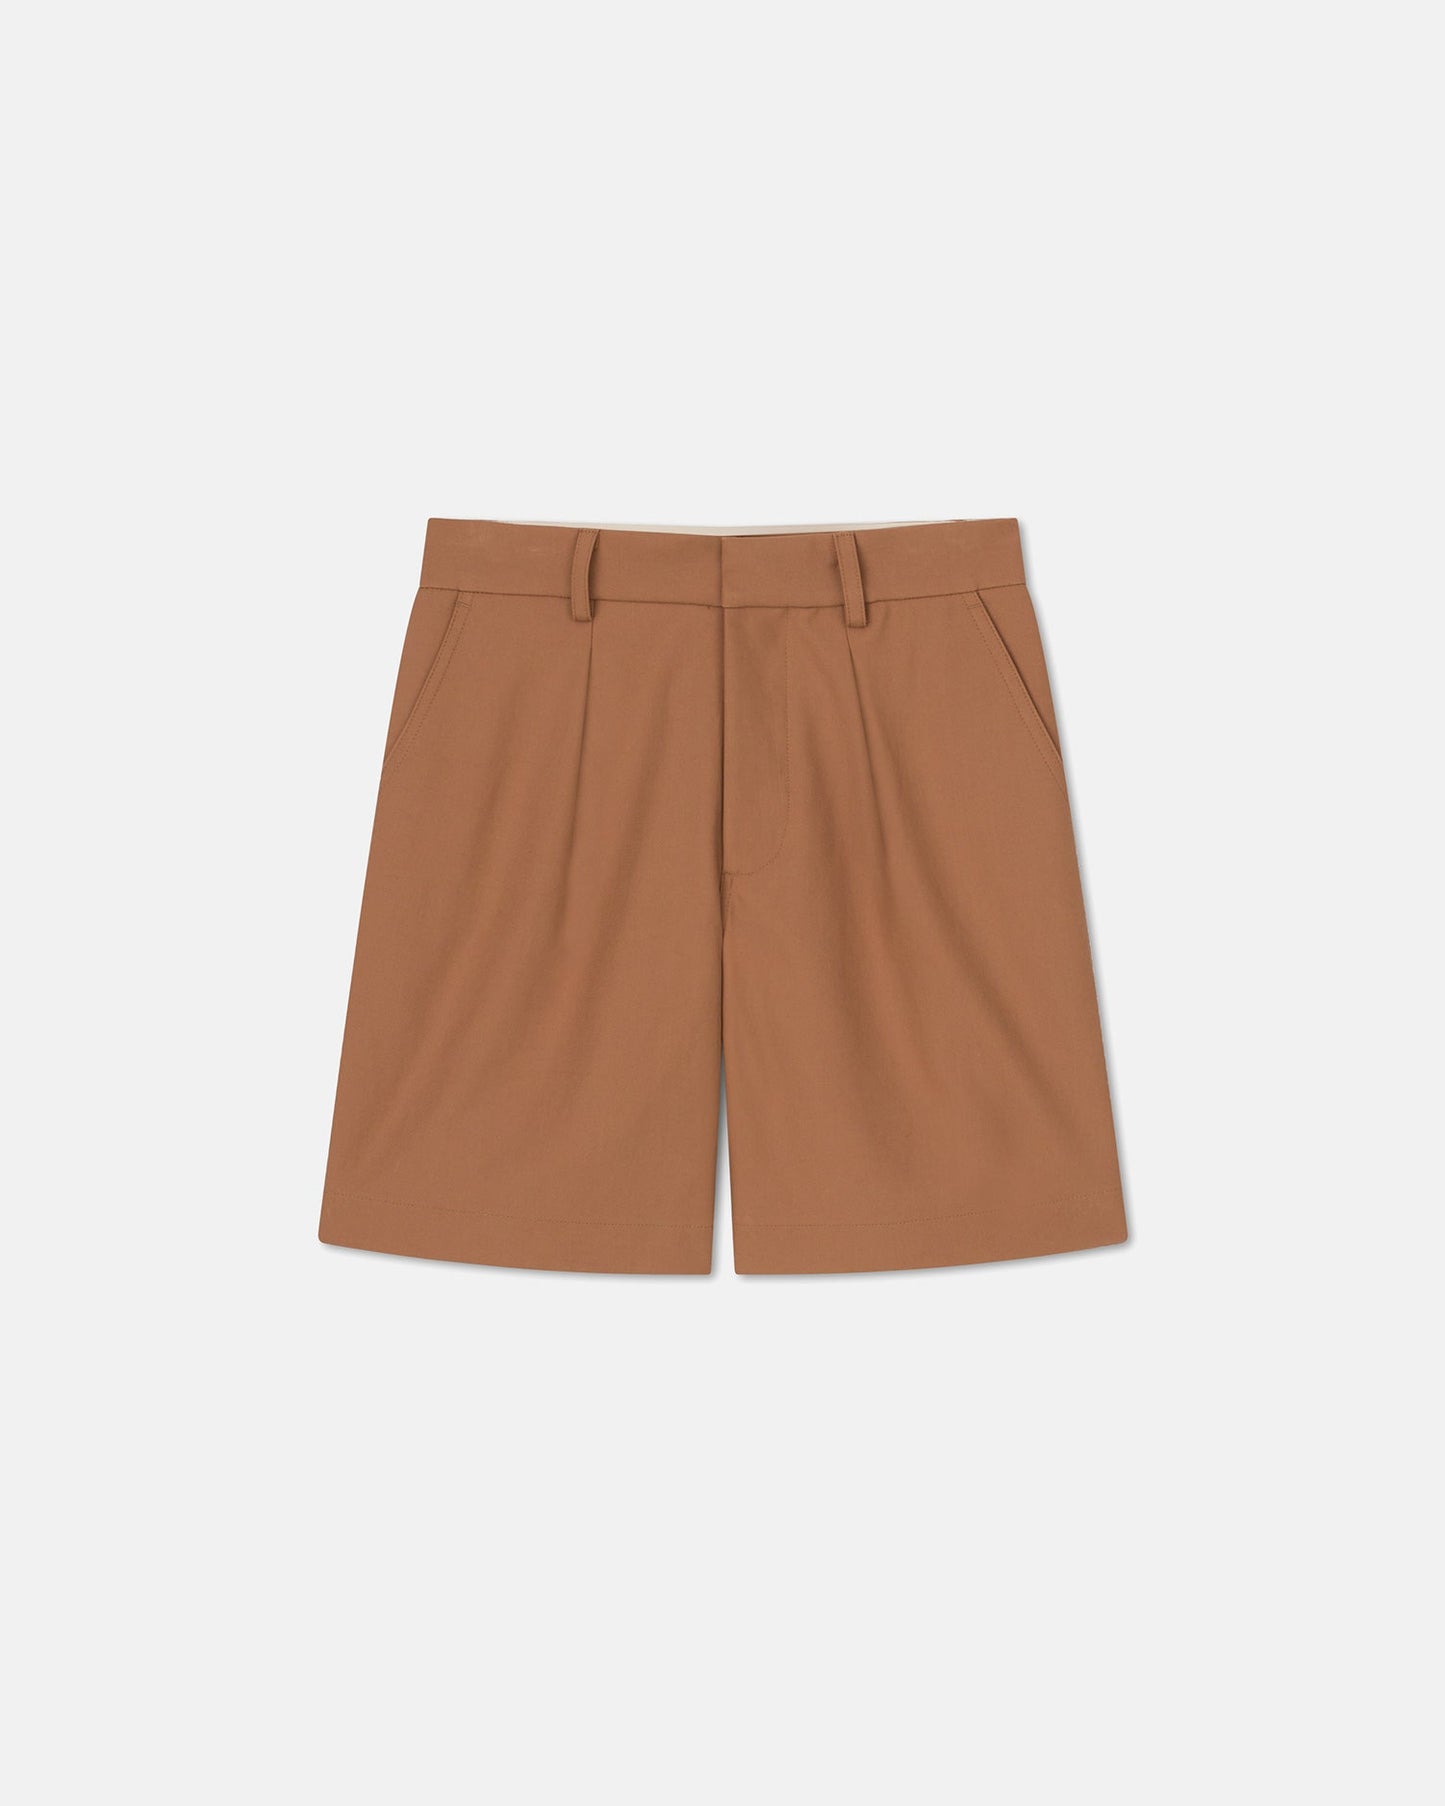 Callen - Structured Twill Shorts - Rust Twill